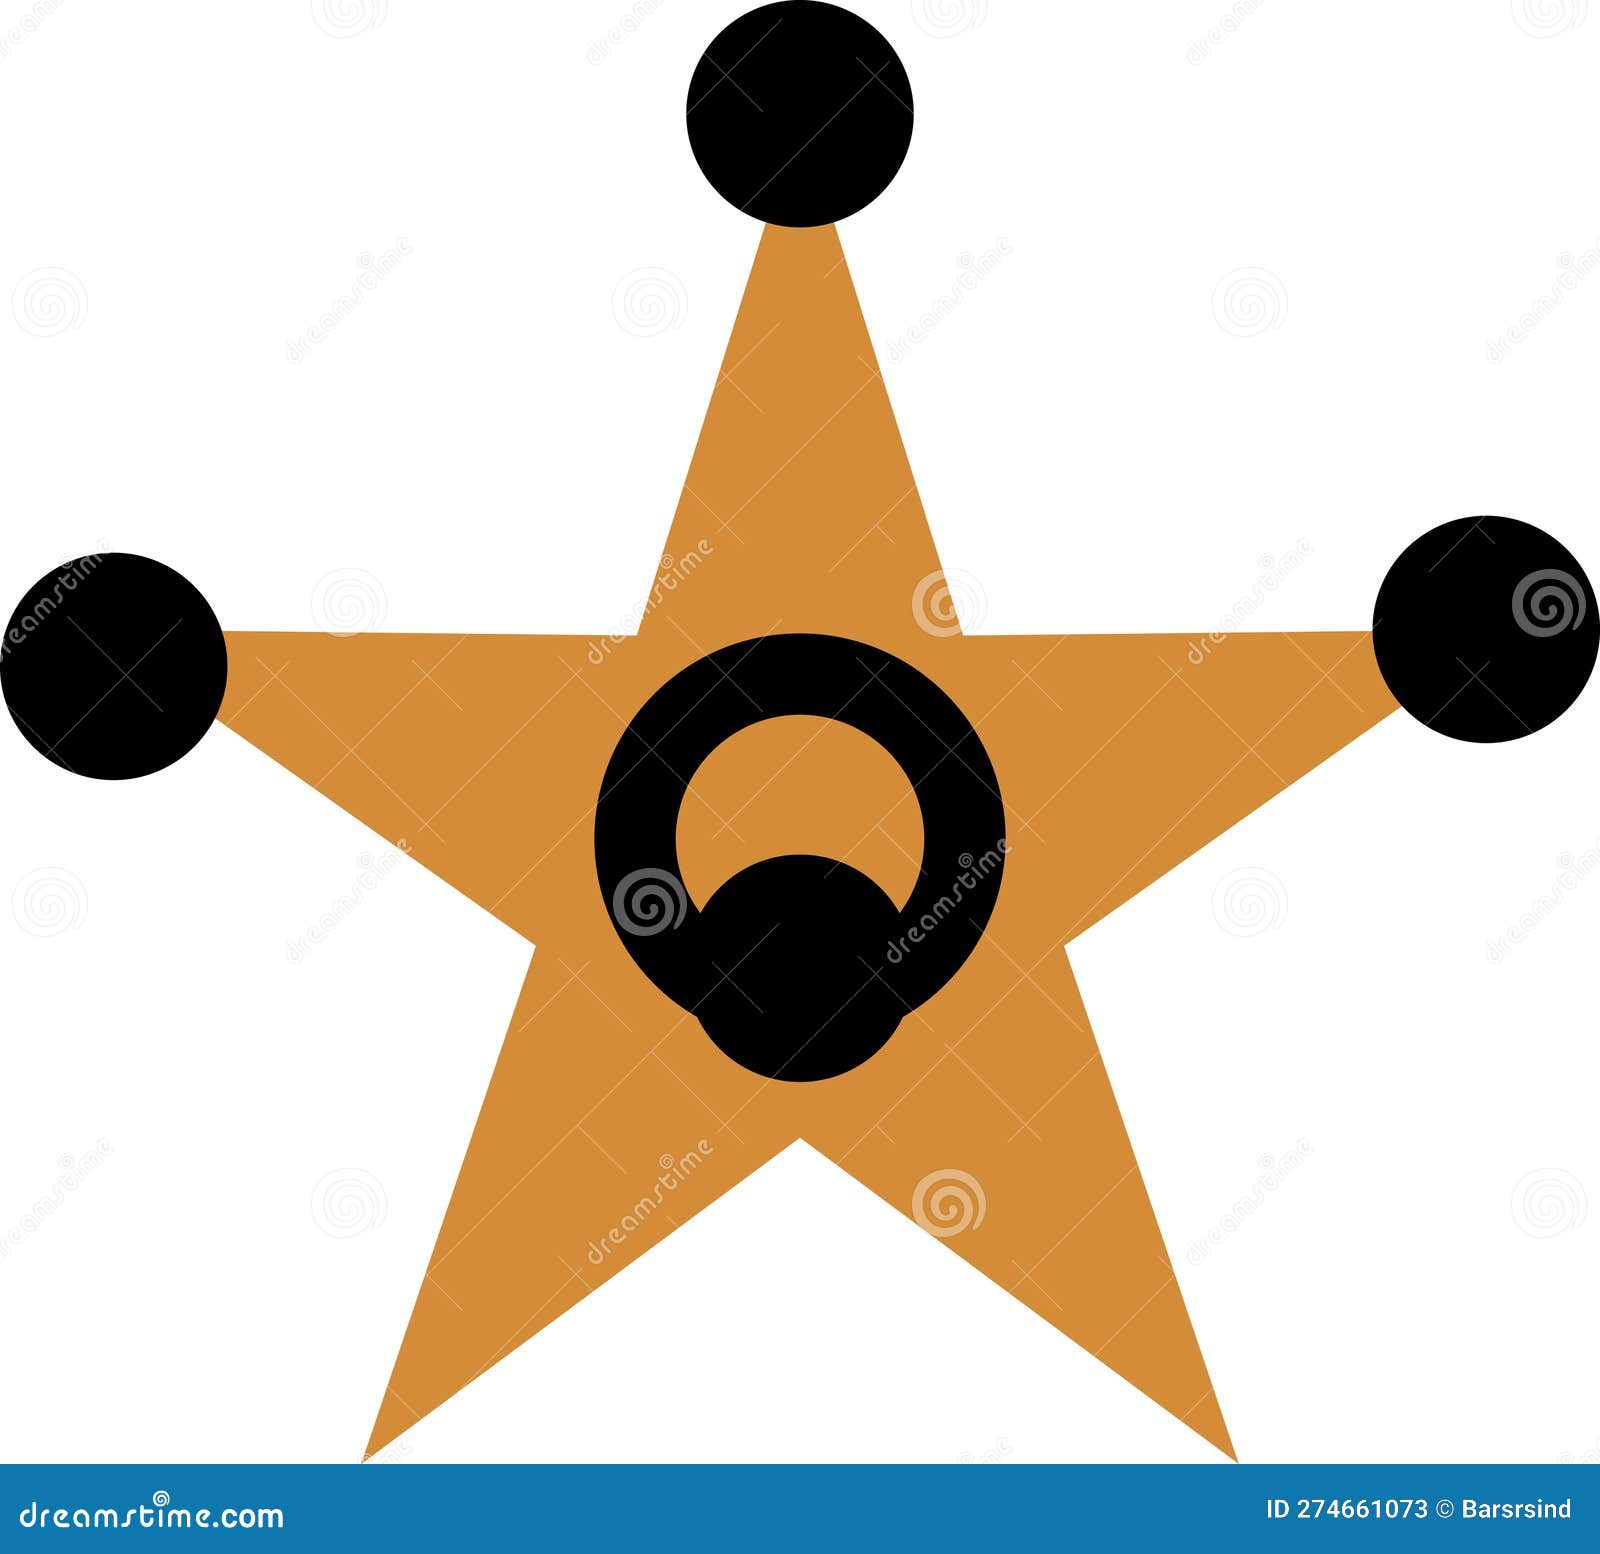 5 point star symbol